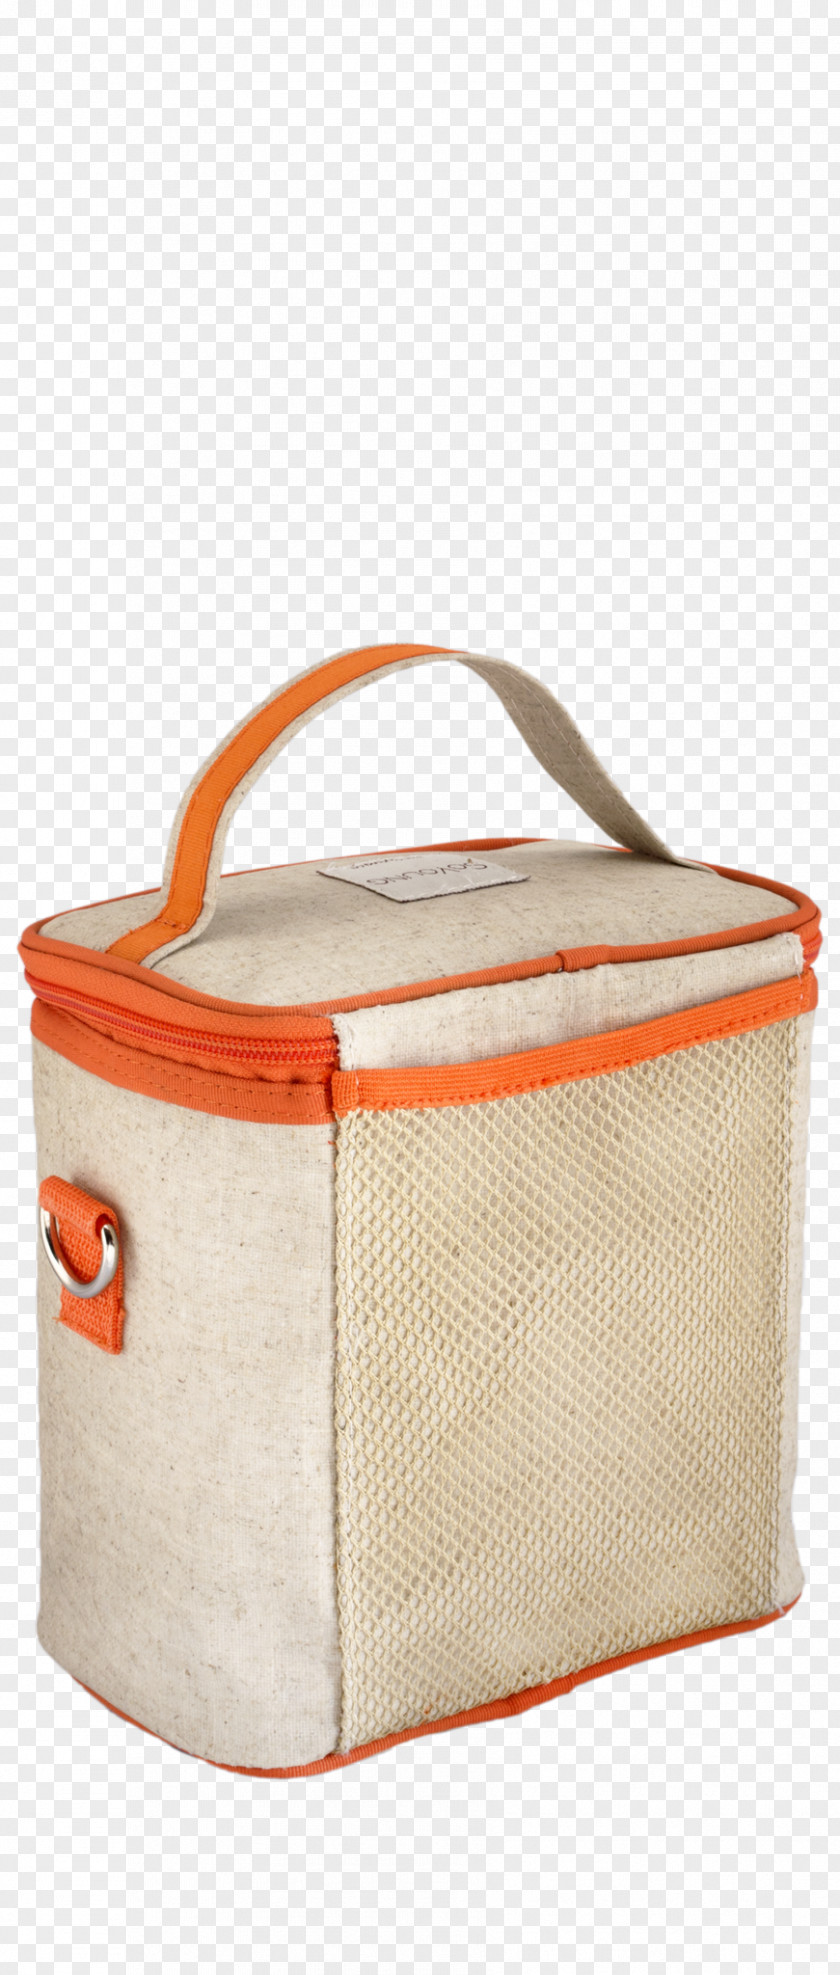 Bag Cooler Thermal Lunchbox Handbag PNG